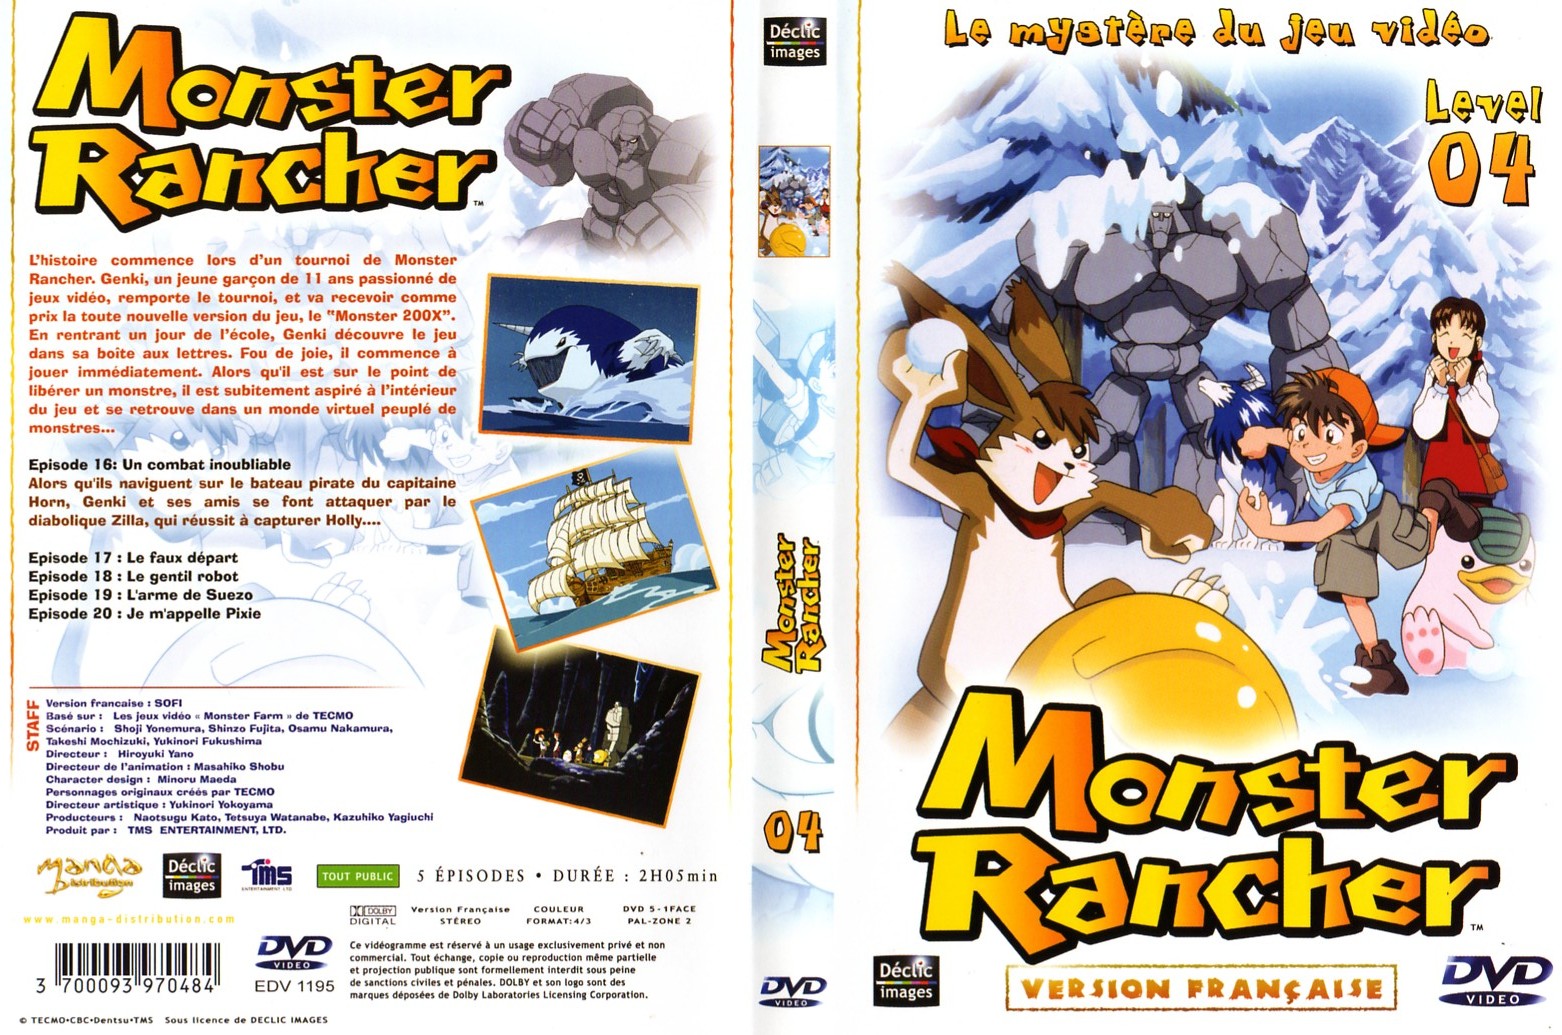 Jaquette DVD Monster rancher vol 4